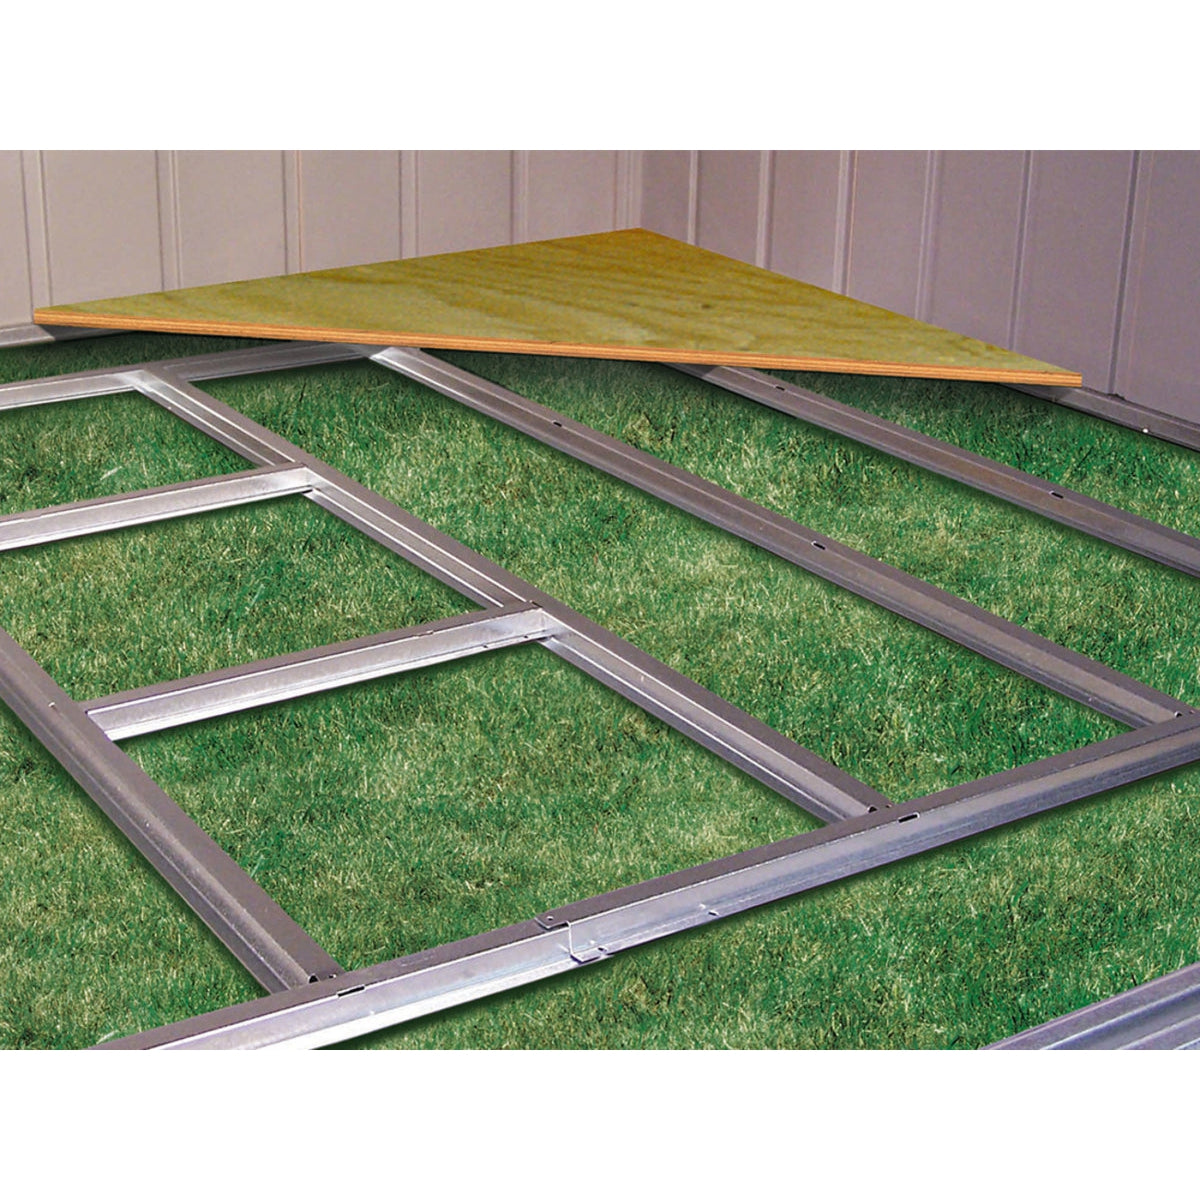 Floor Frame Kit for Arrow Classic & Arrow Select Sheds 12 x12 ft.-Delightful Yard